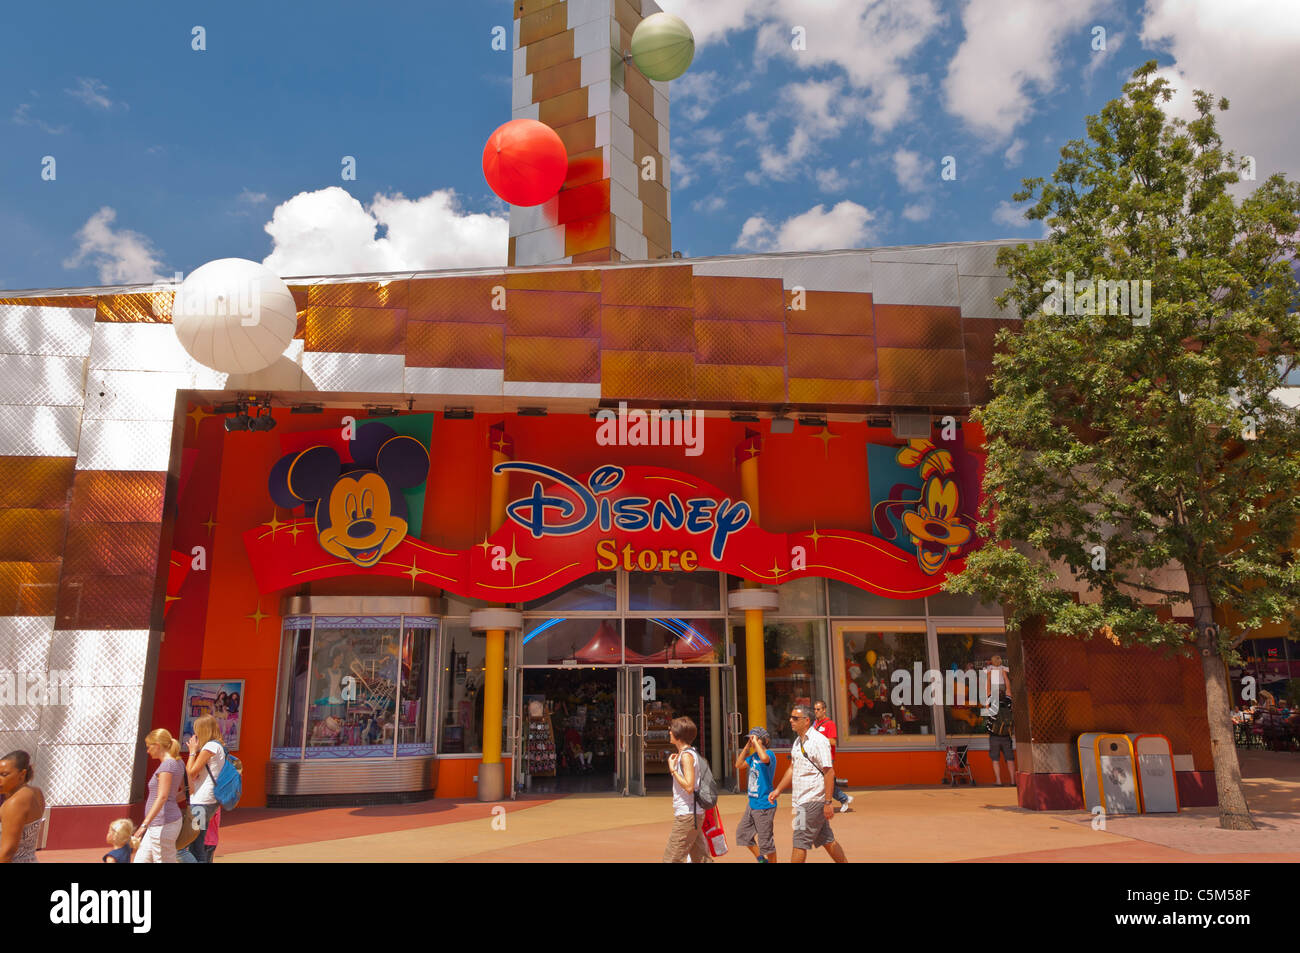 The Disney store in Disney Village at Disneyland Paris in France Stock Photo